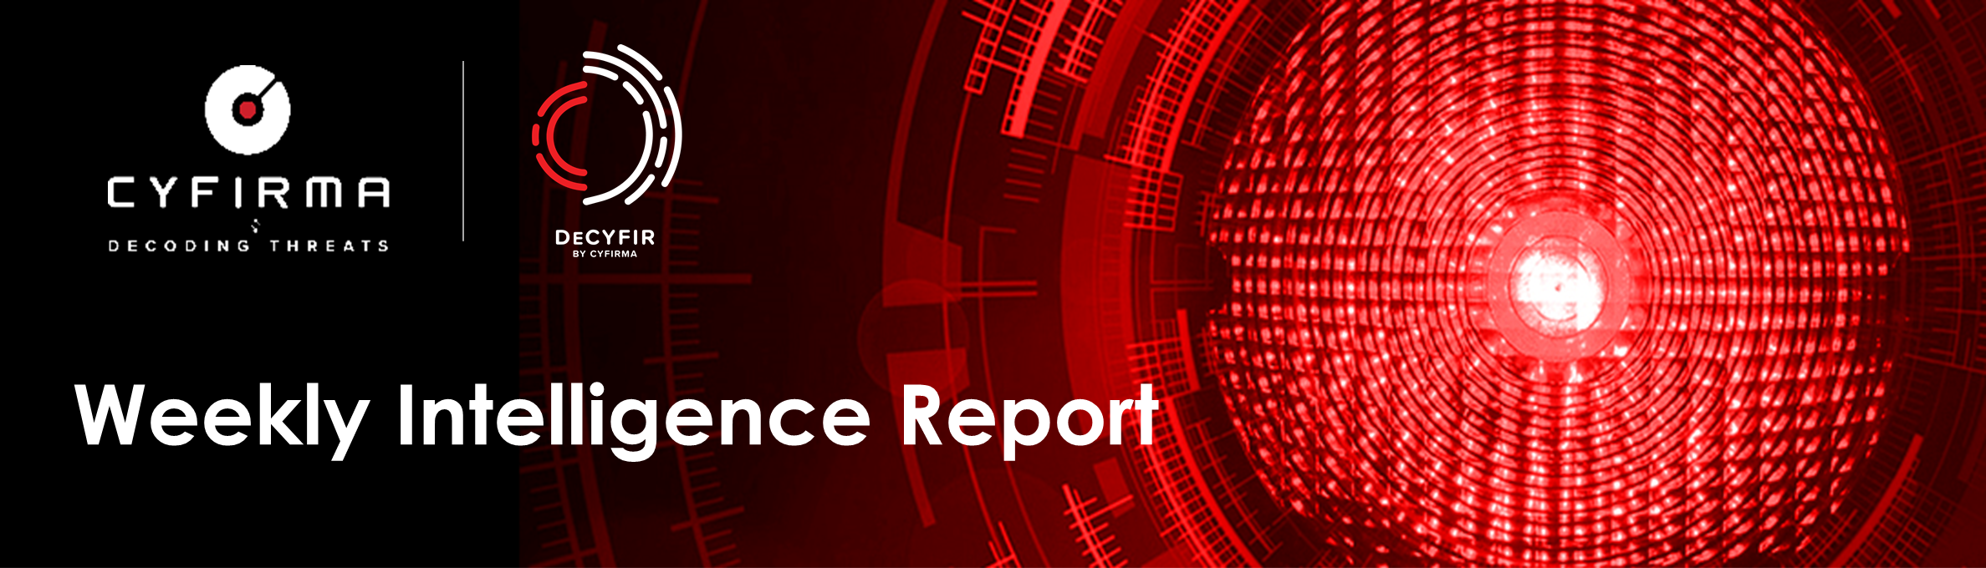 Weekly Cyber-Intelligence Report – 11 Apr 2021